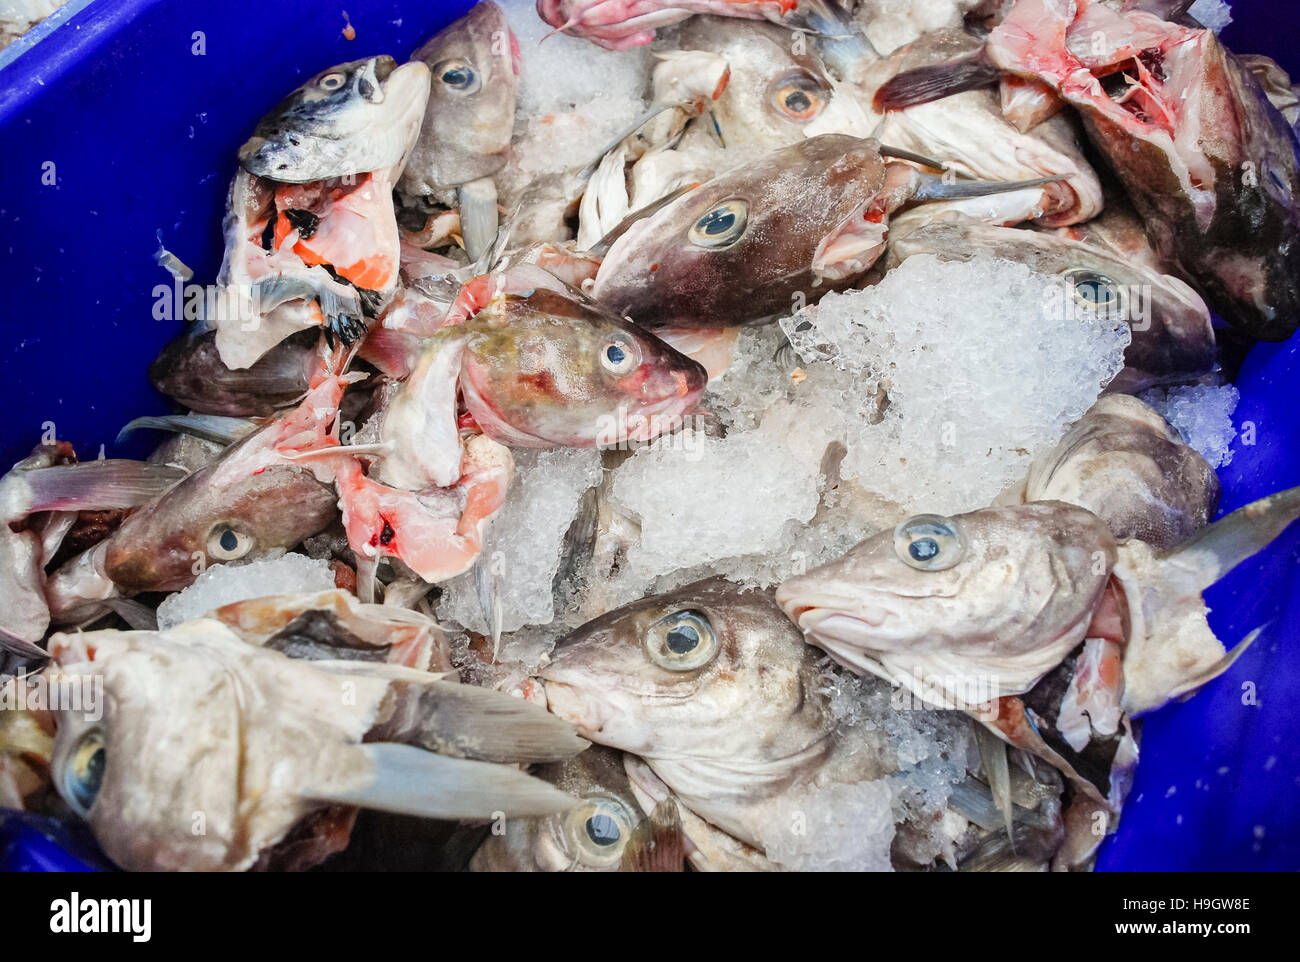 Bucket full of cod fish heads at a fishmonger Stock Photo